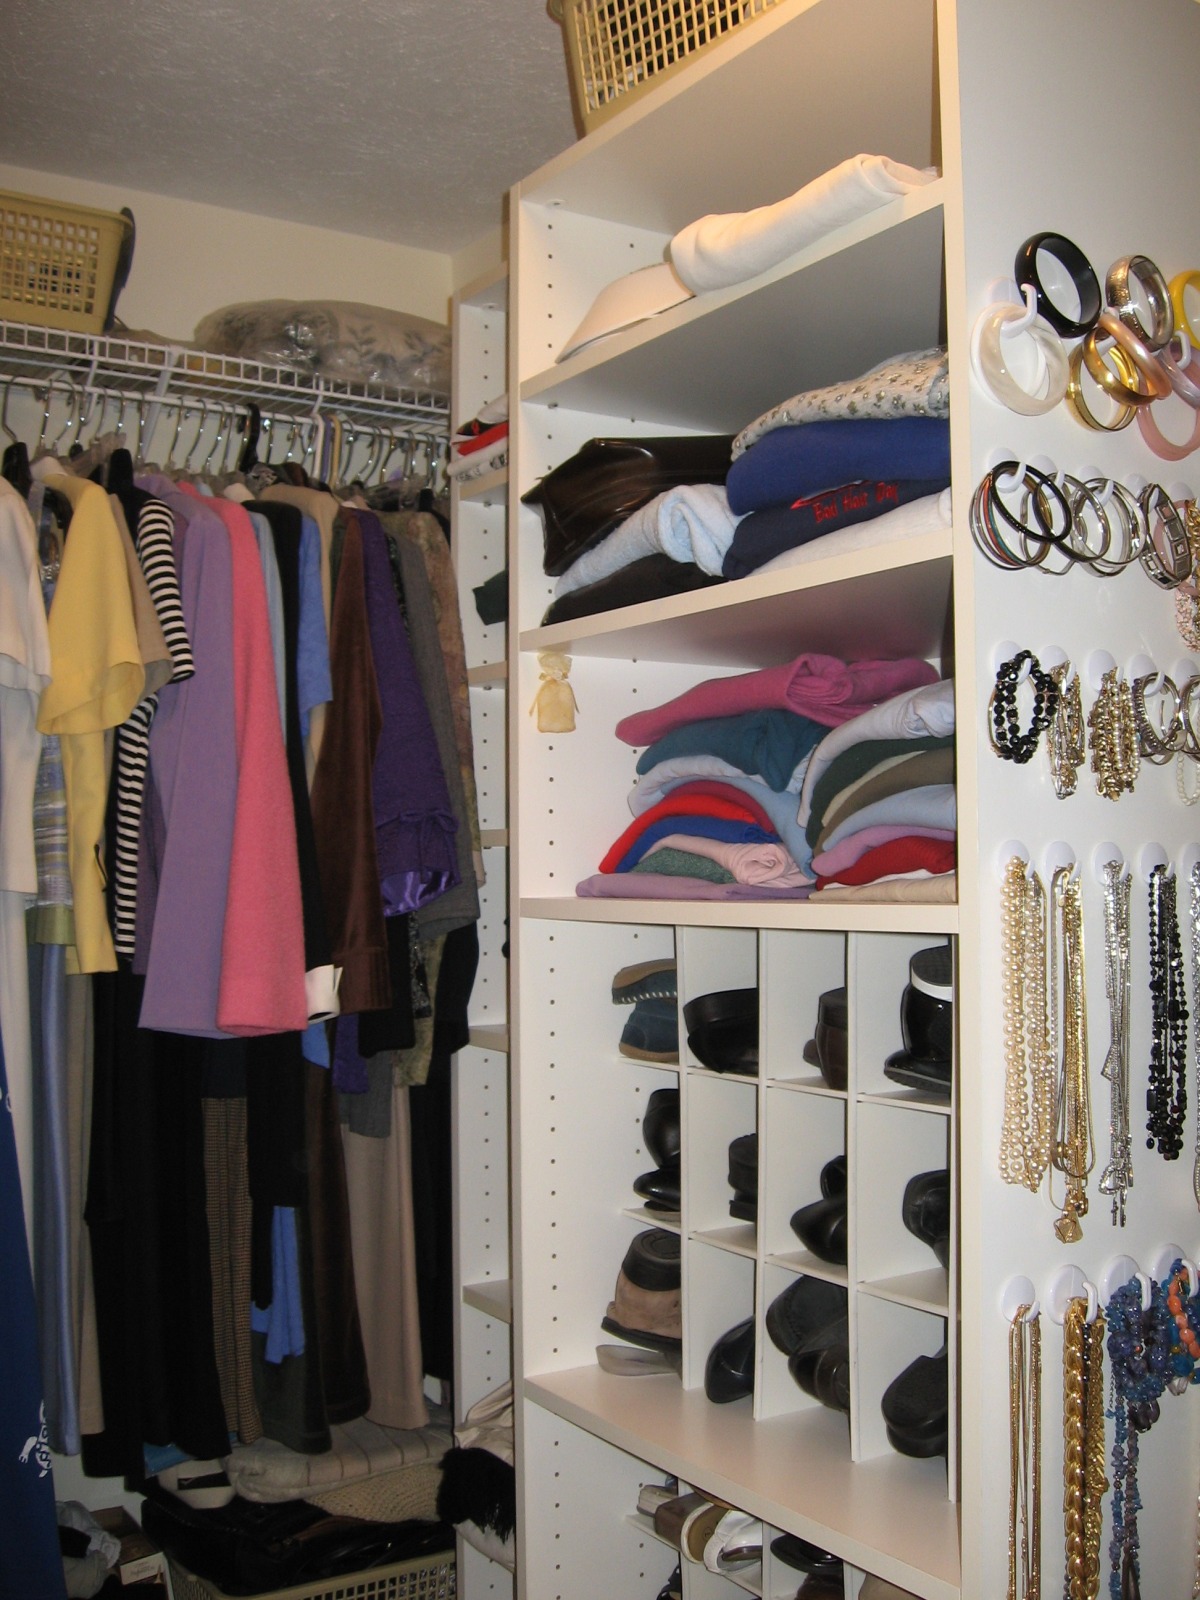 Organzing a closet